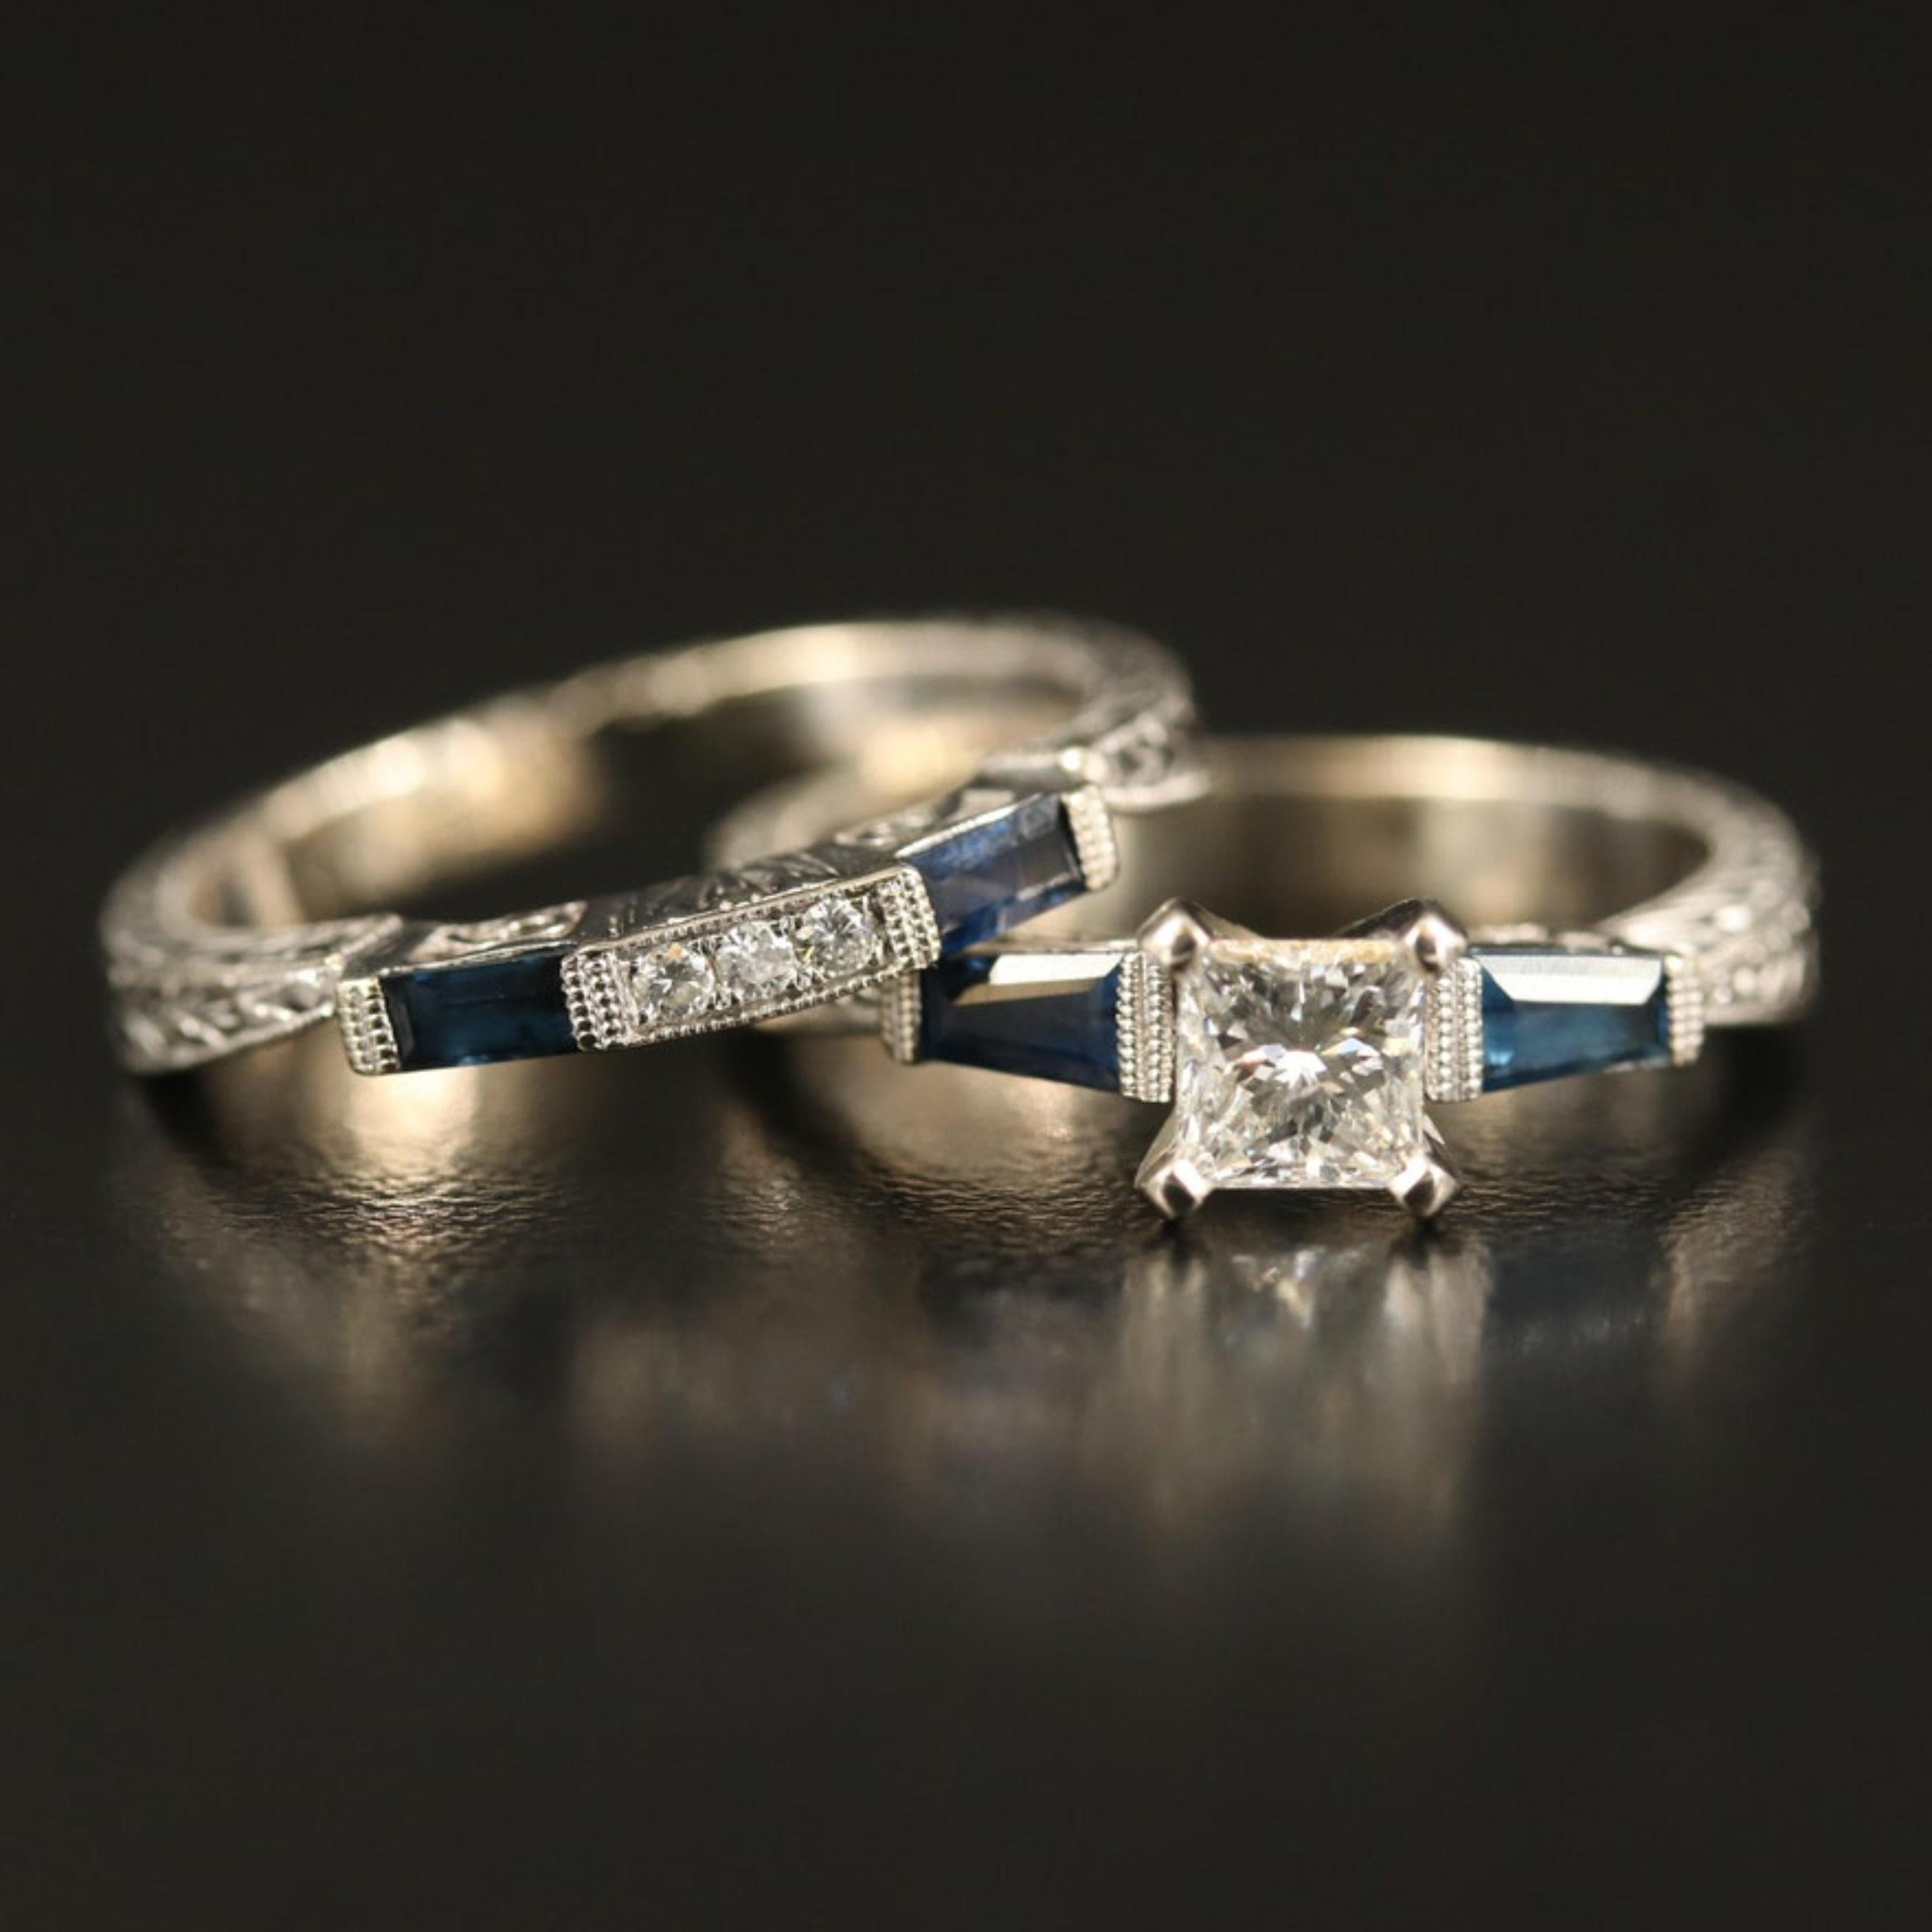 For Sale:  Vintage 1.23 Carat Princess Cut Diamond Sapphire Bridal Ring Set in 18K Gold 2